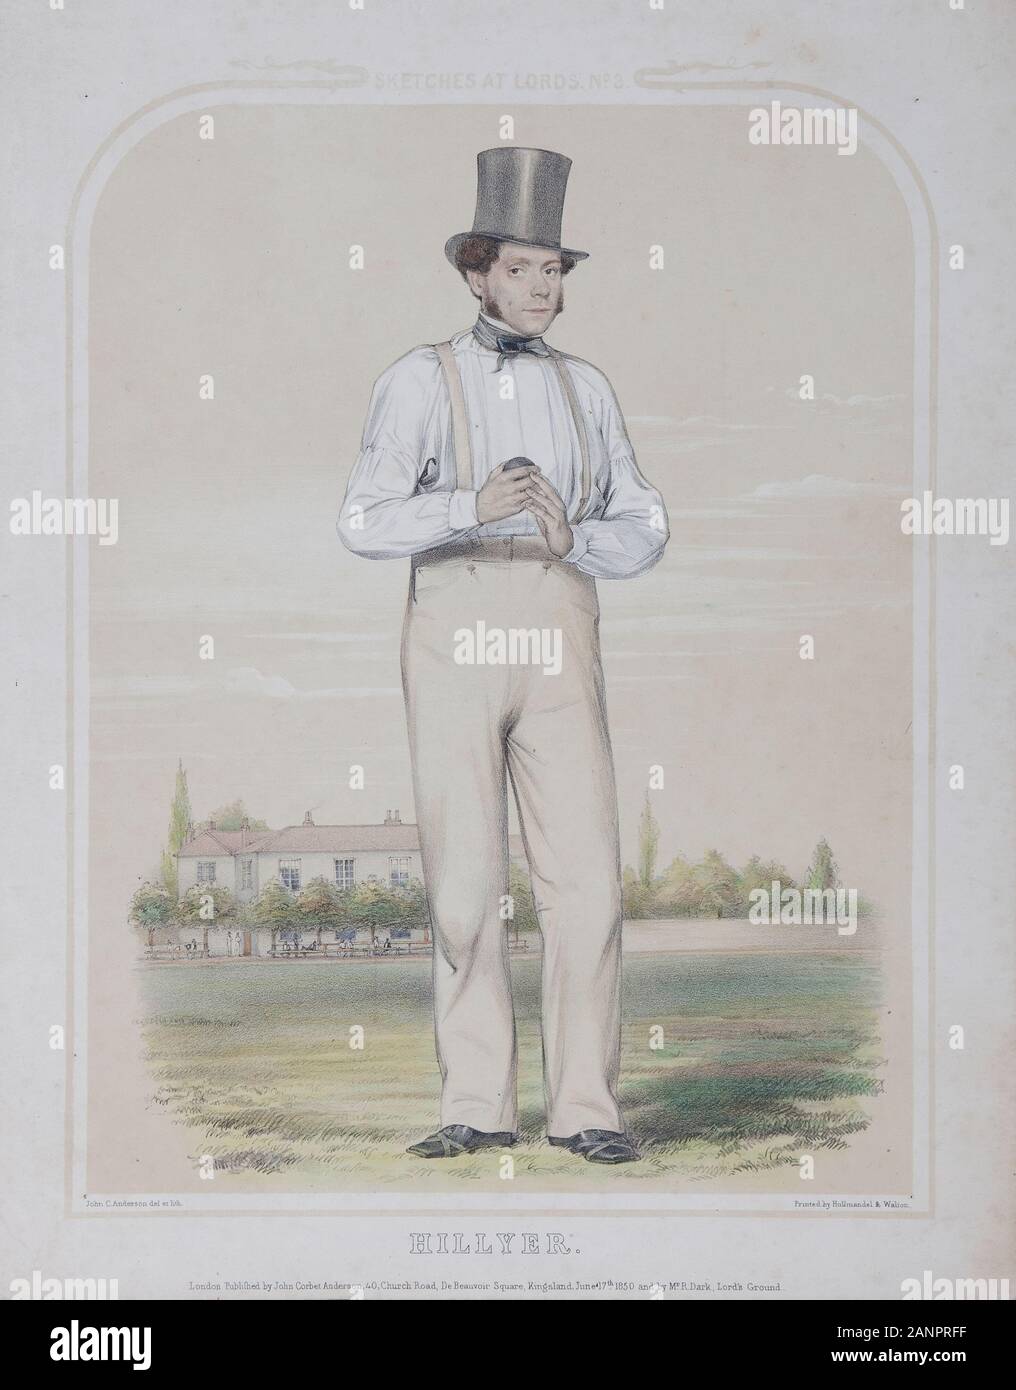 William Hillyer. 1813-1861 . Xix secolo inglese professional cricketer per Kent County Cricket Club e Marylebone cricket club Foto Stock